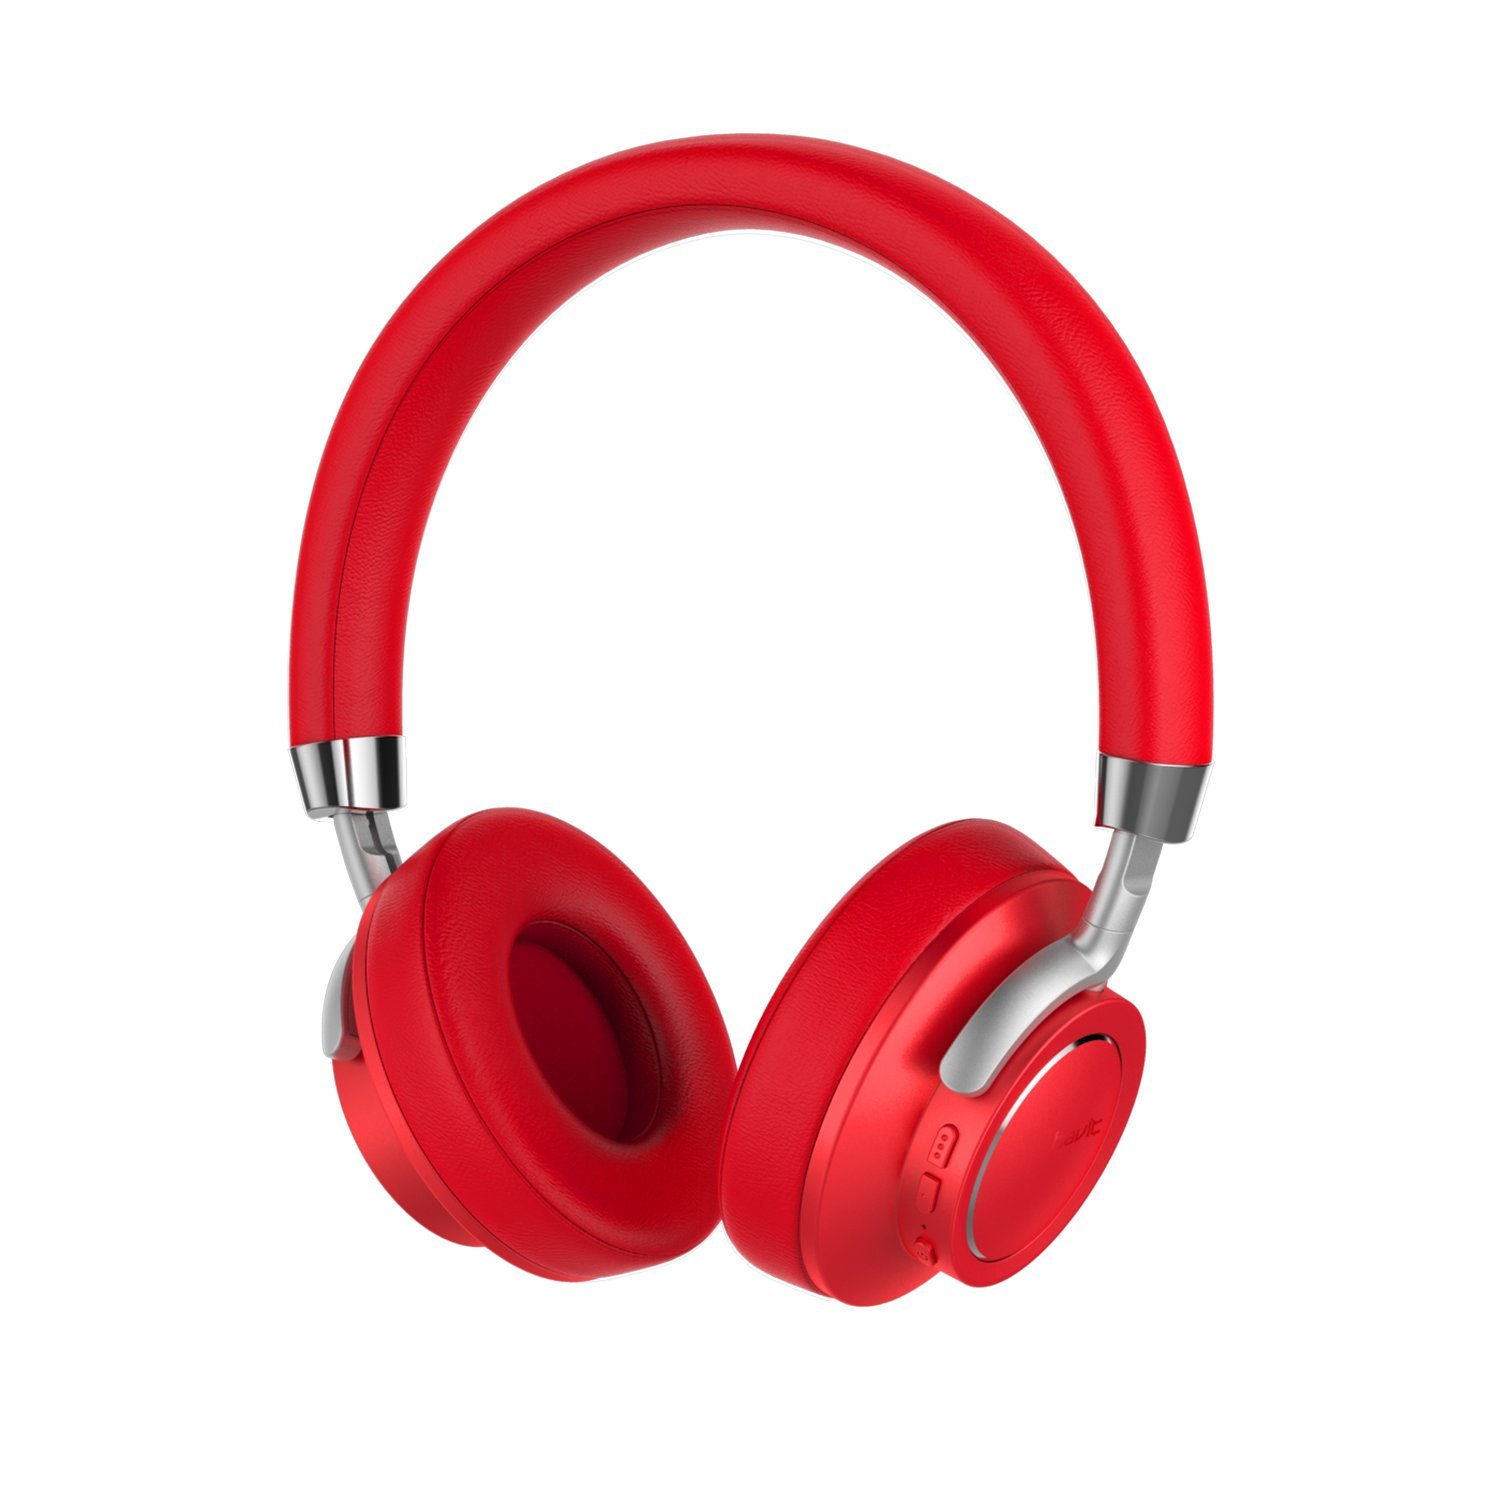 HAVIT I18 Wired / Wireless Headphones - Bluetooth 4.1 | HAVIT Online